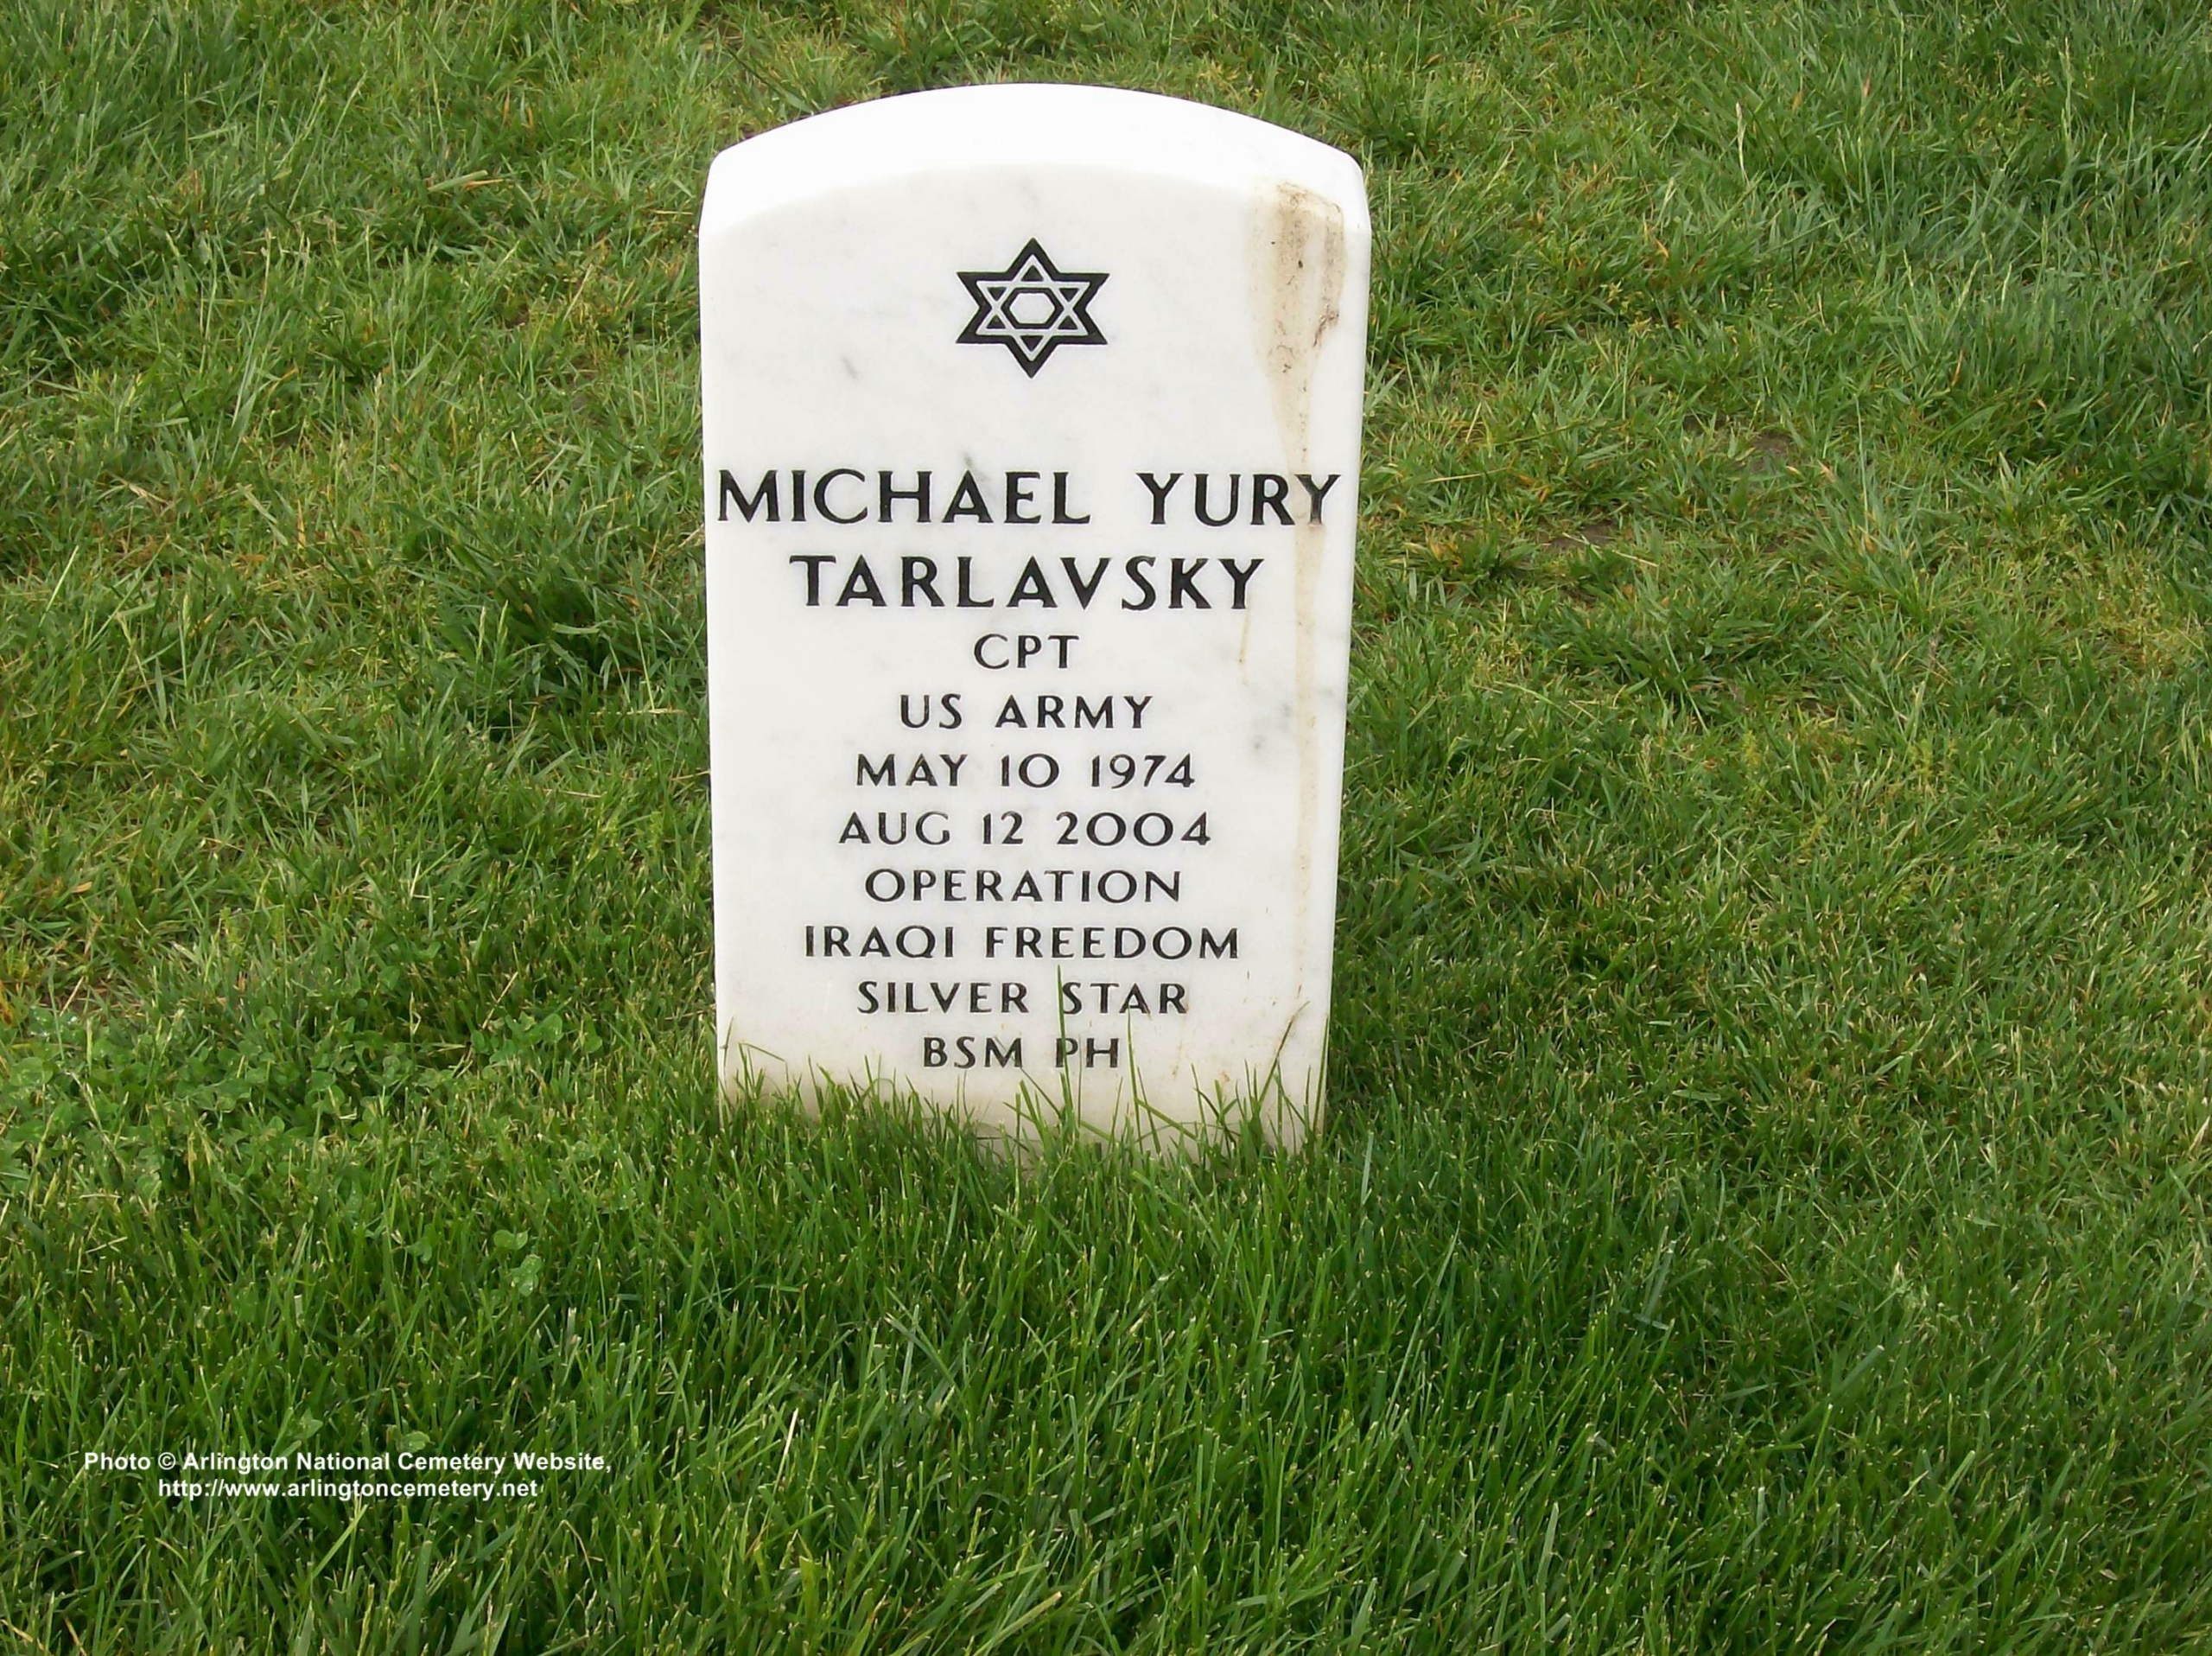 mytarlavsky-gravesite-photo-may-2008-001